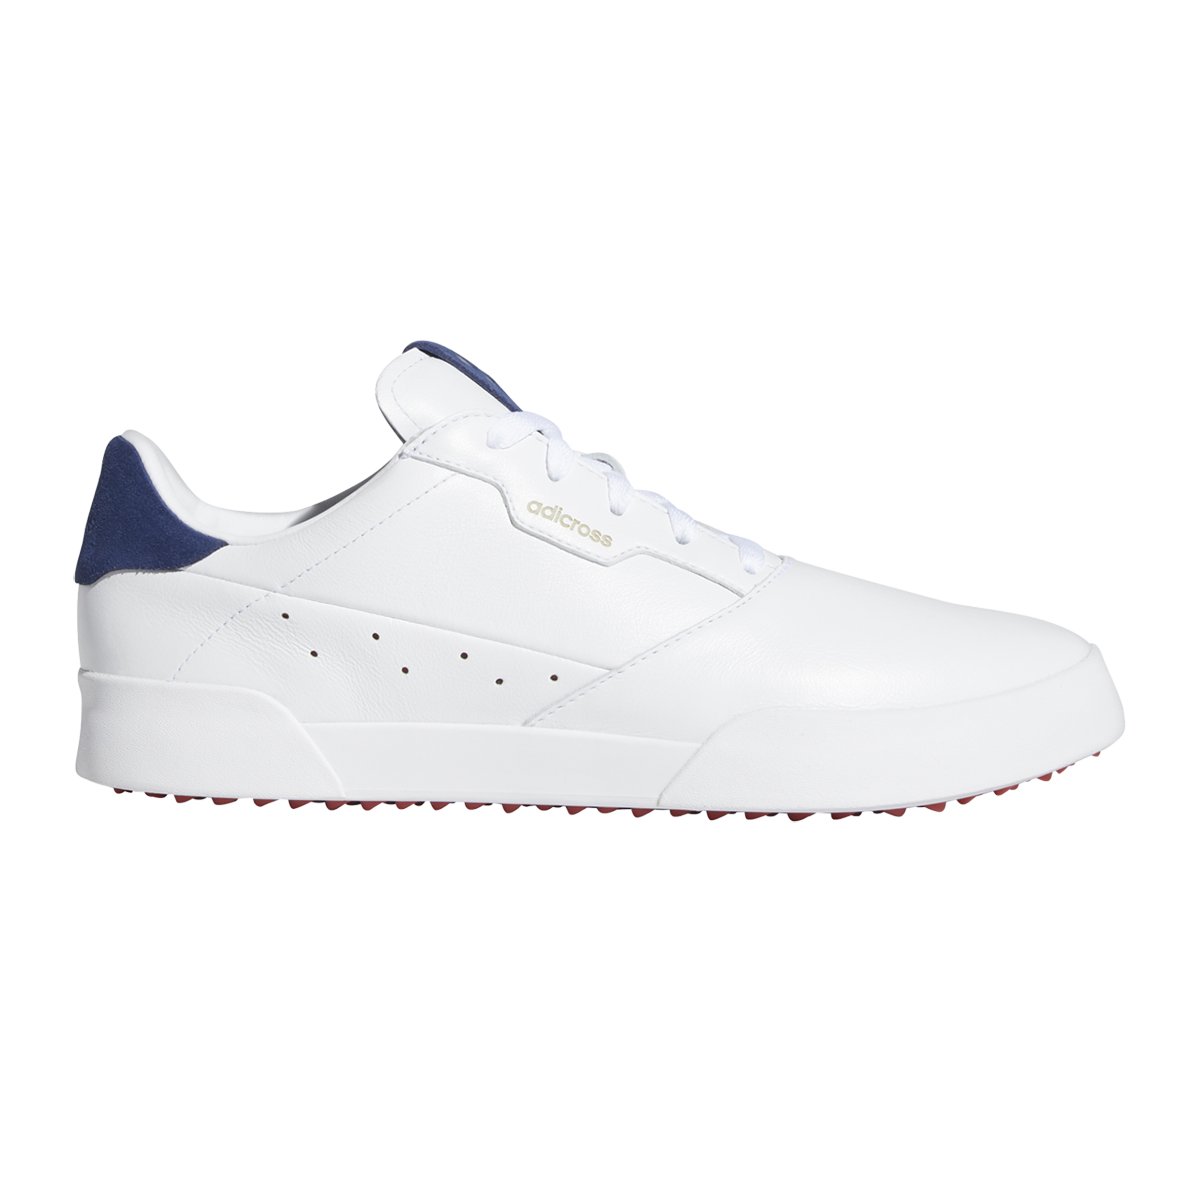 white adicross golf shoes